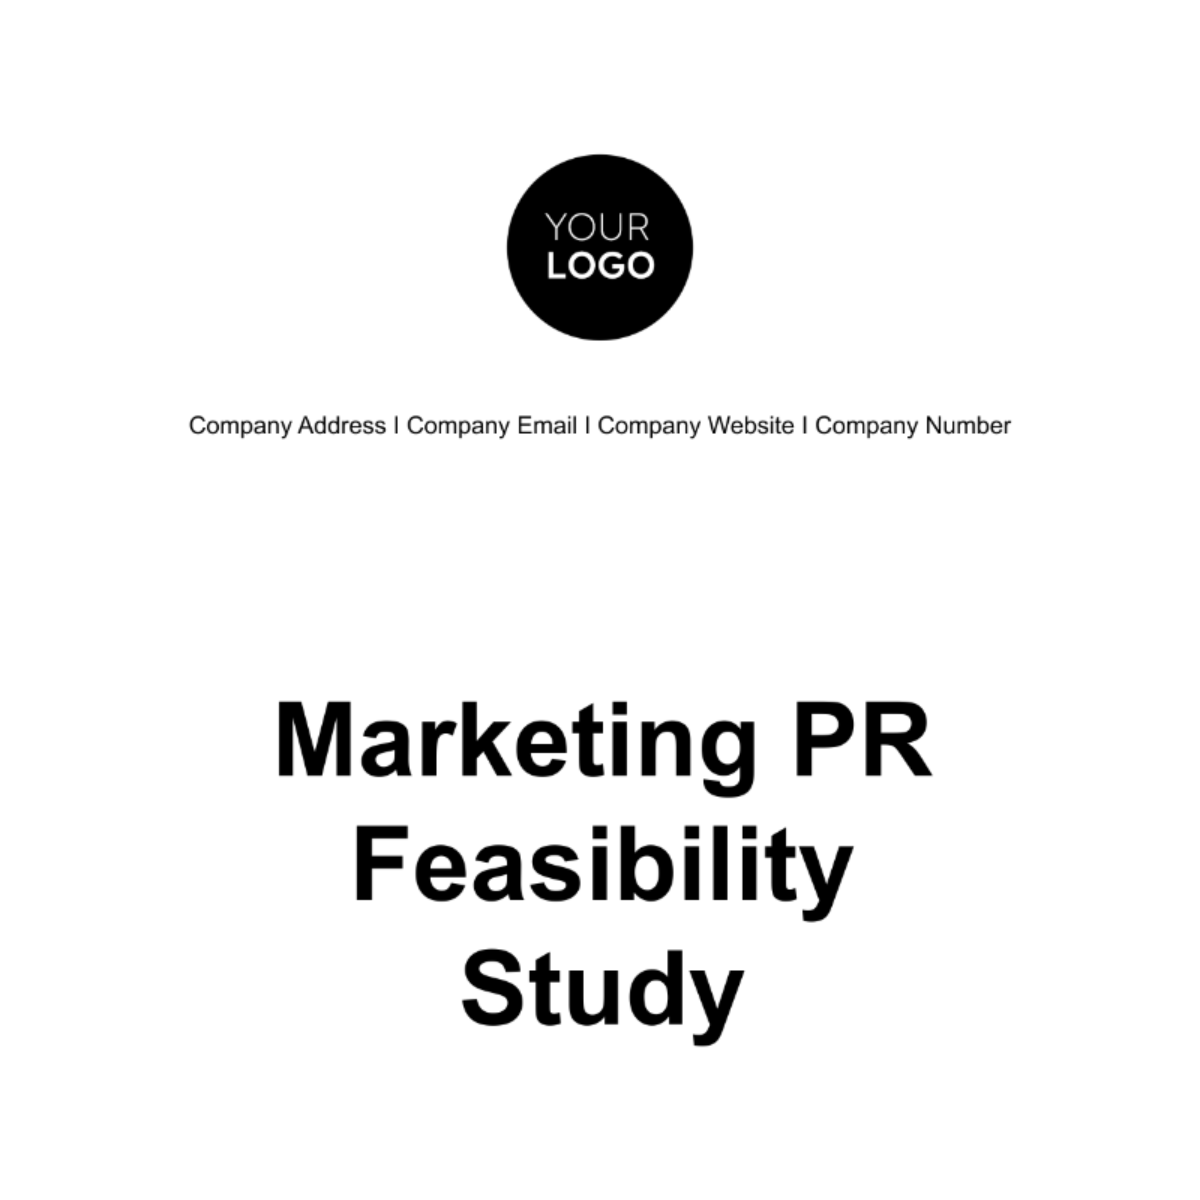 Marketing PR Feasibility Study Template